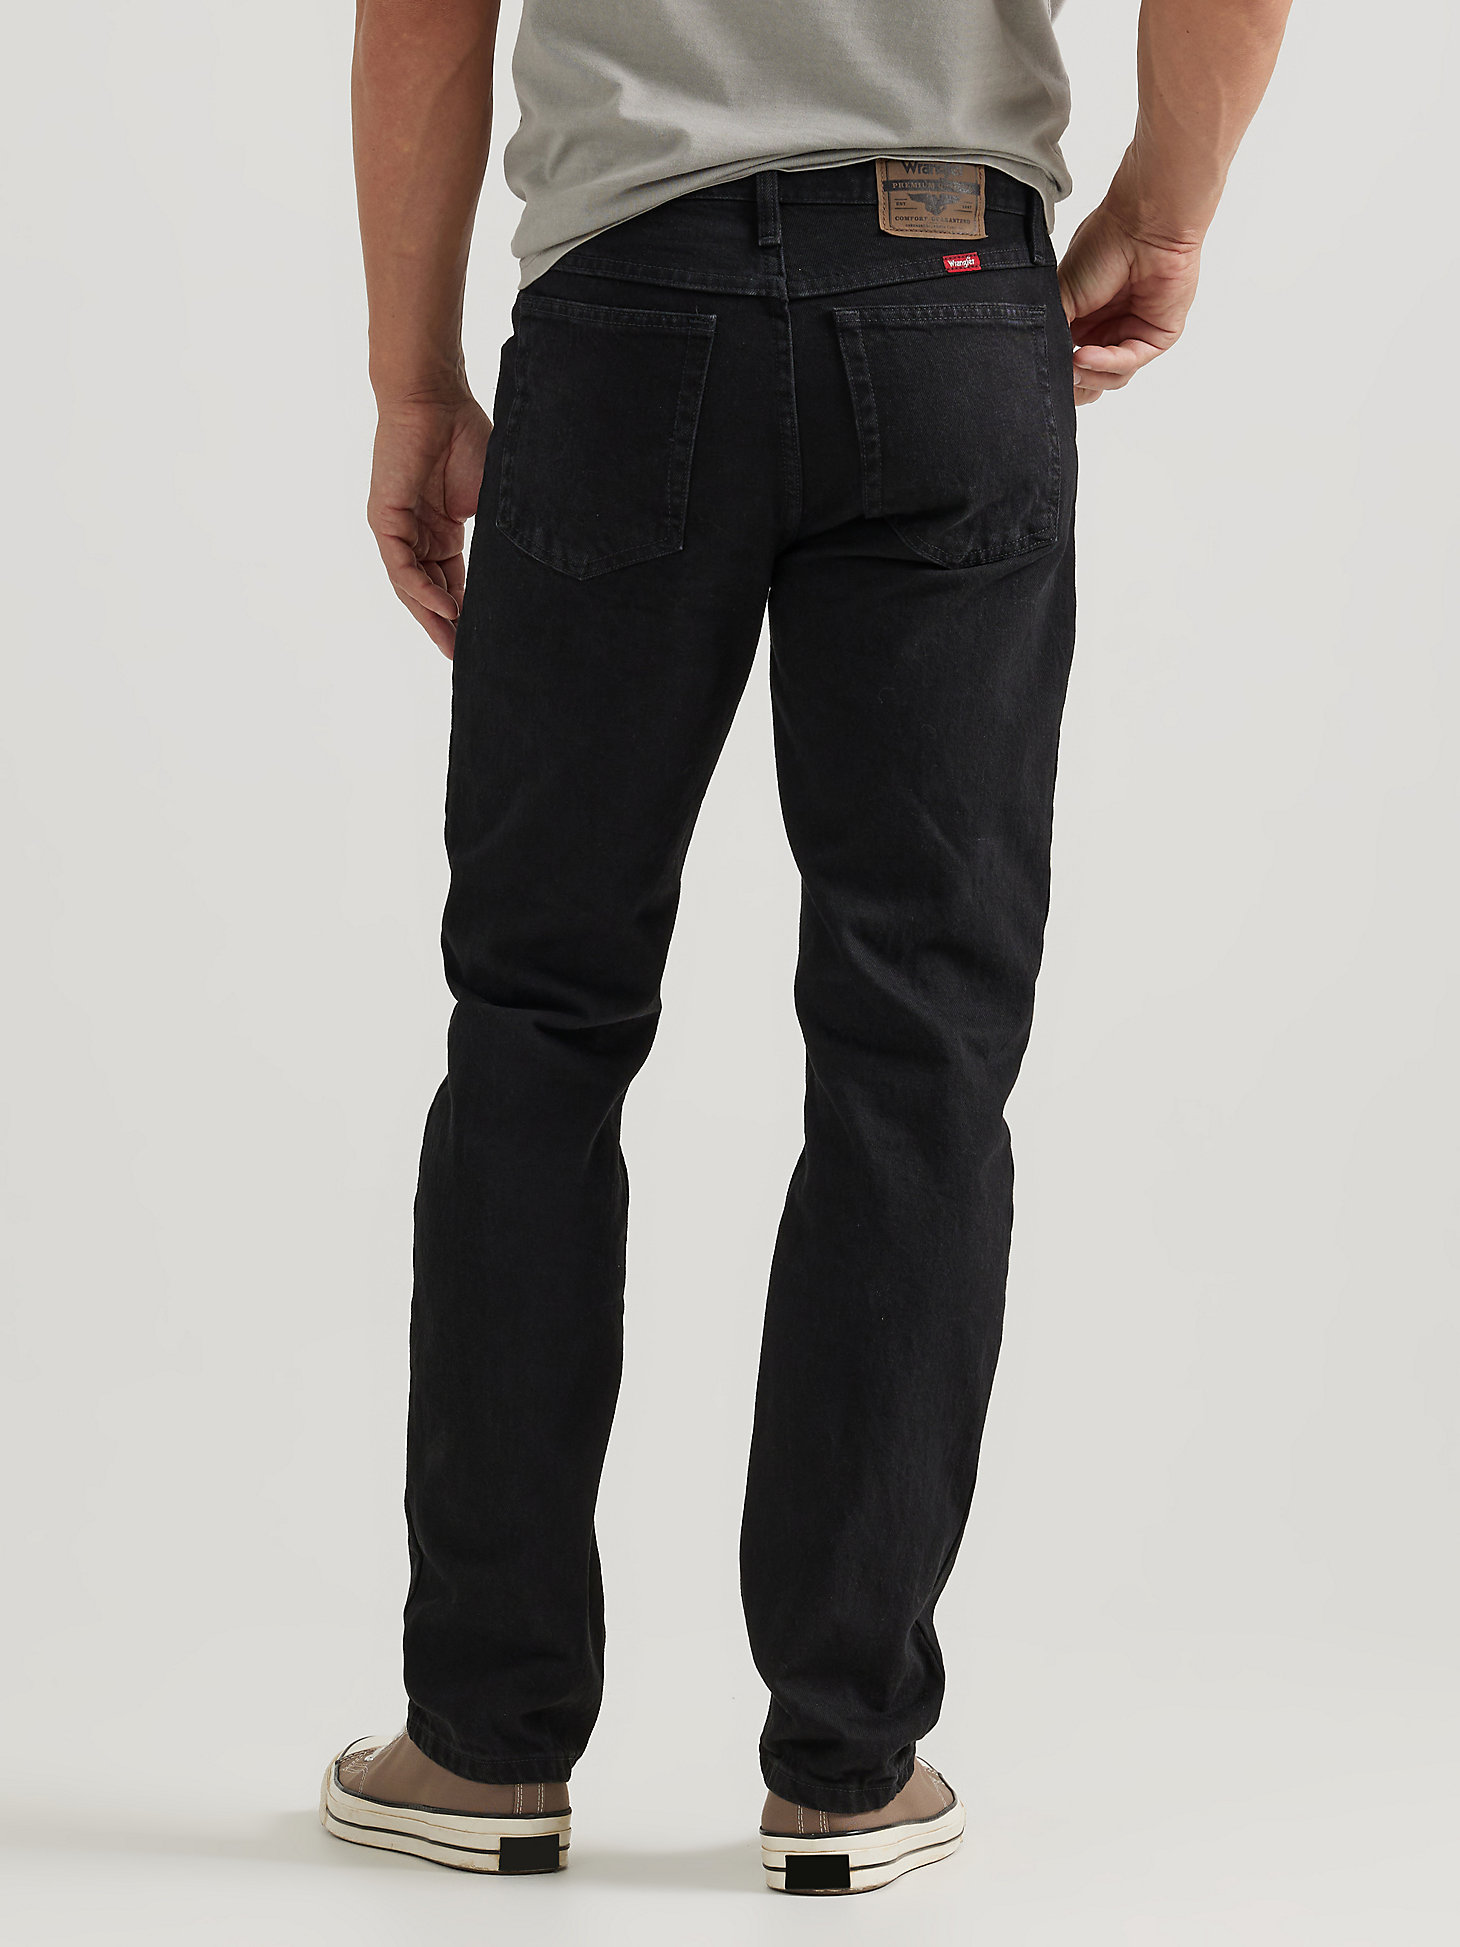 Wrangler® Five Star Premium Denim Regular Fit Jean in Coal Black alternative view 1